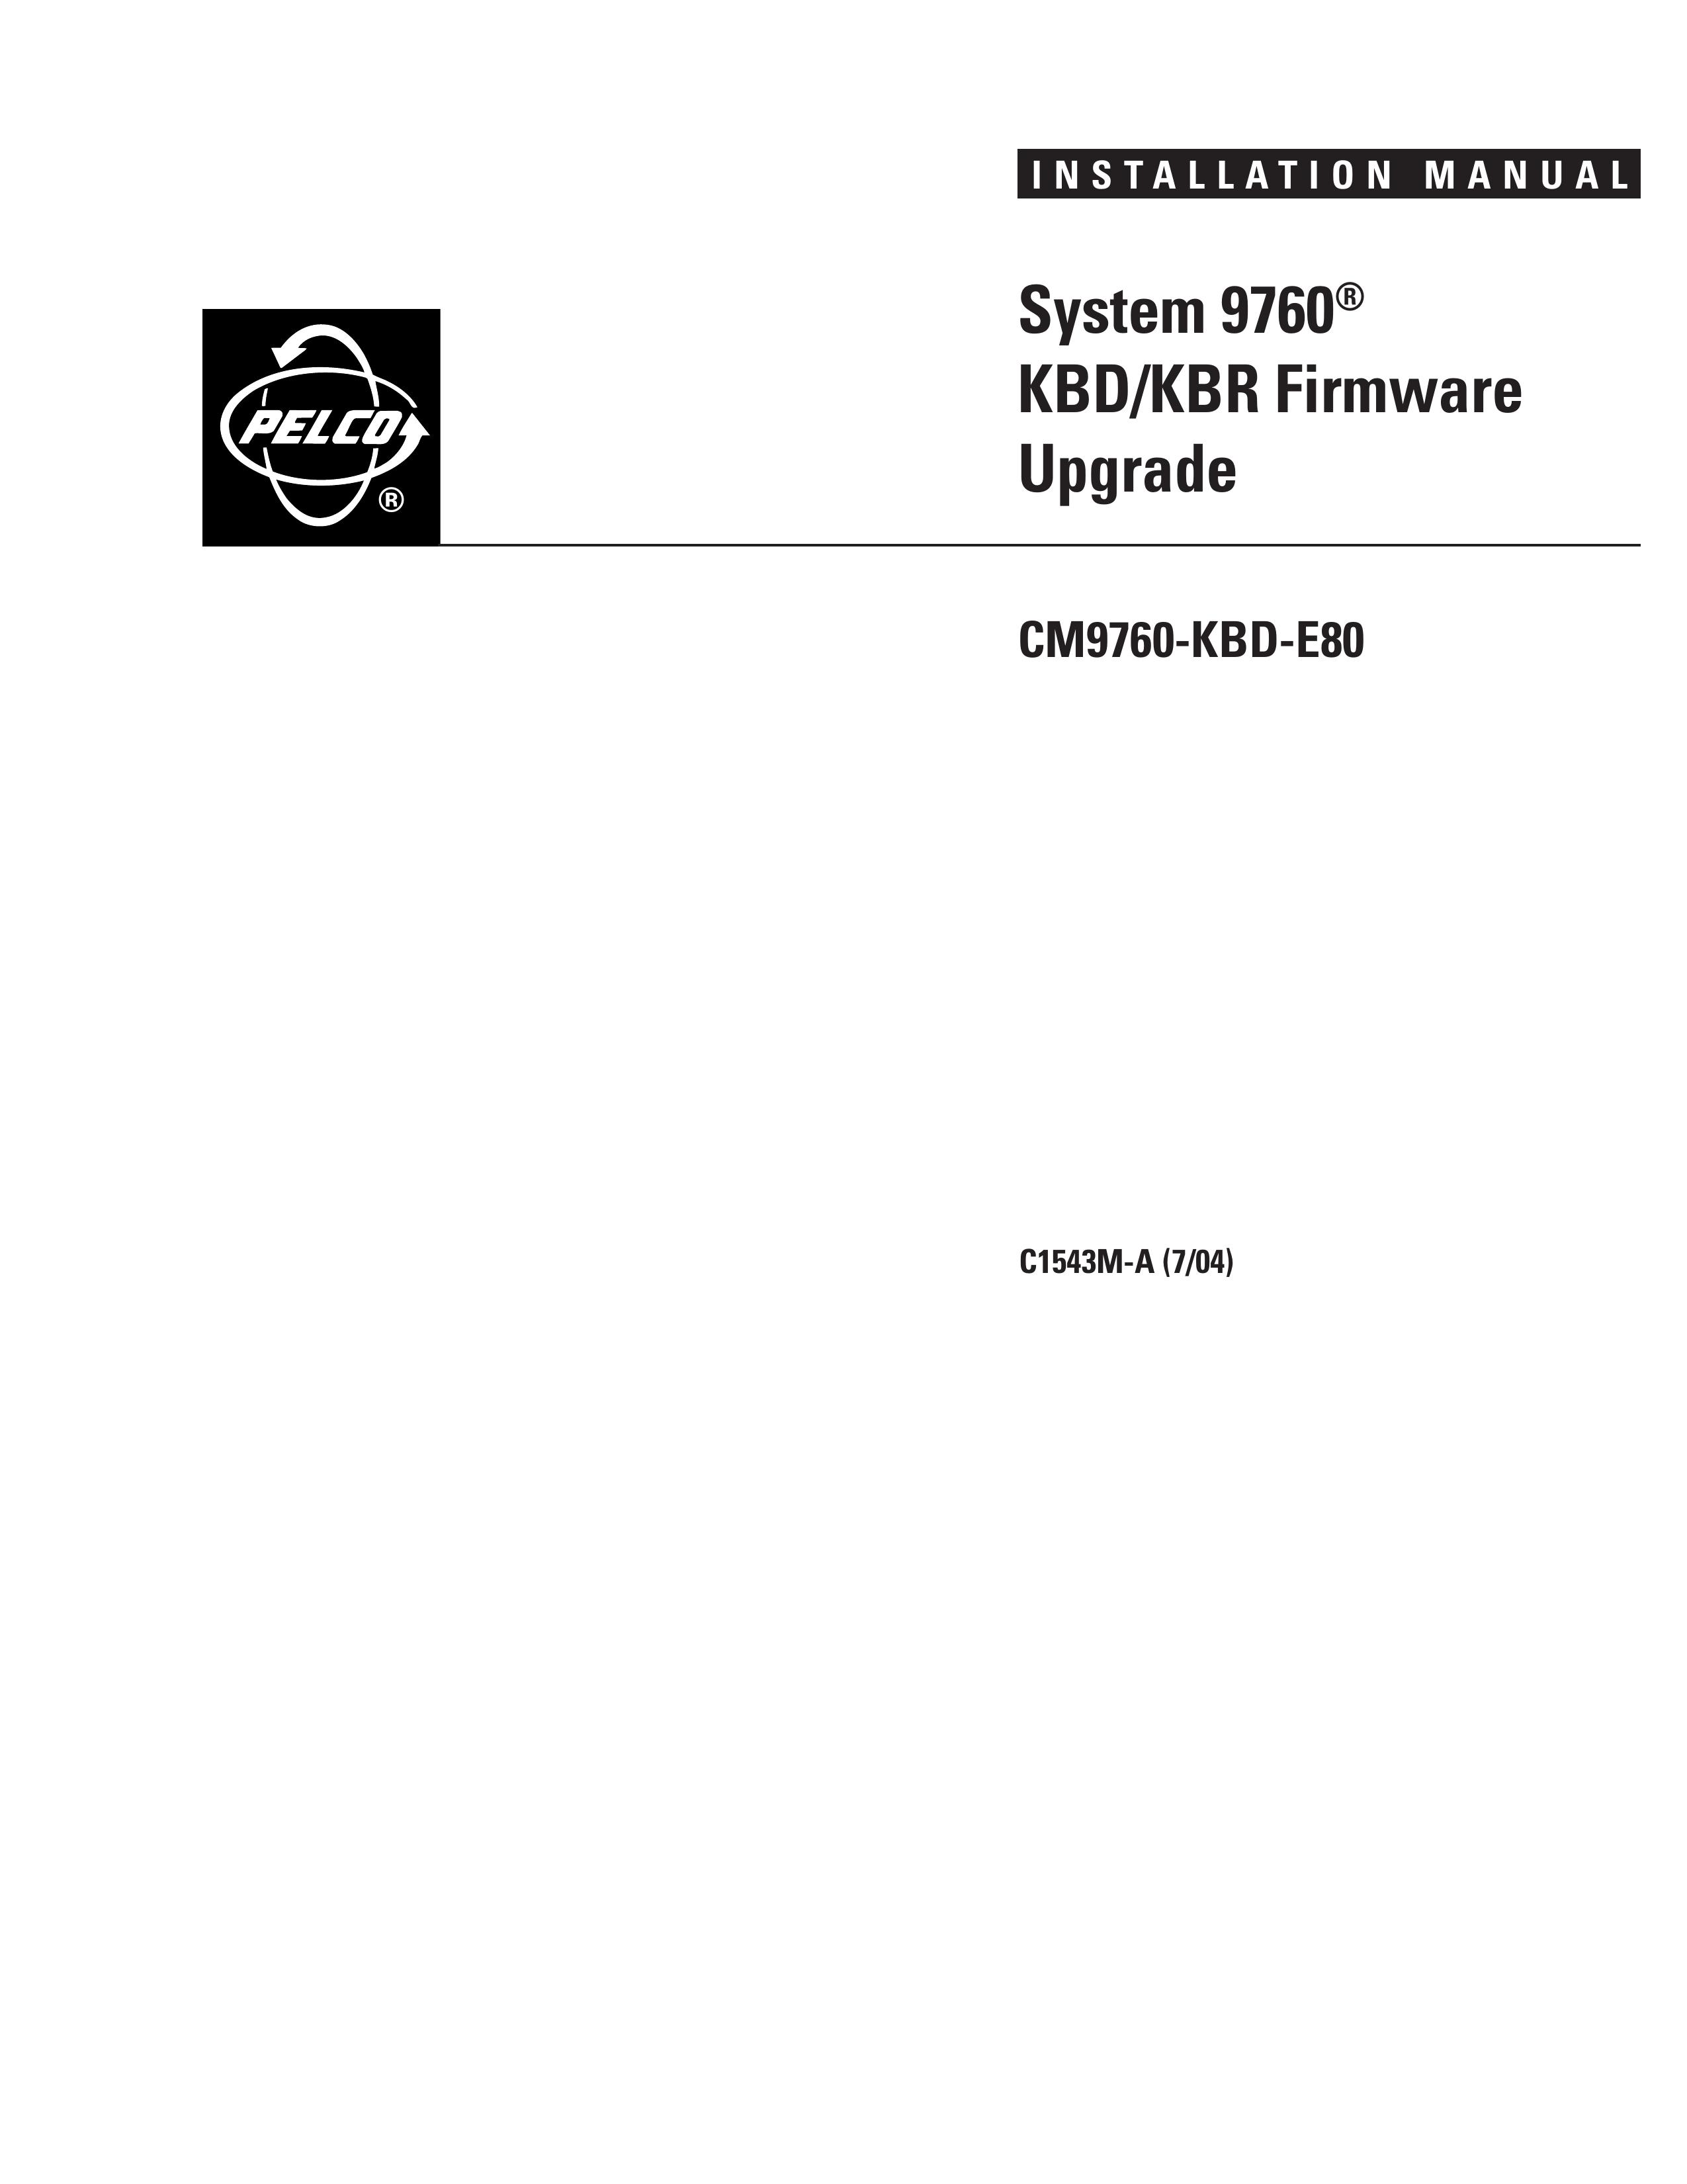 Pelco CM9760-KBD-E80 Marine Sanitation System User Manual